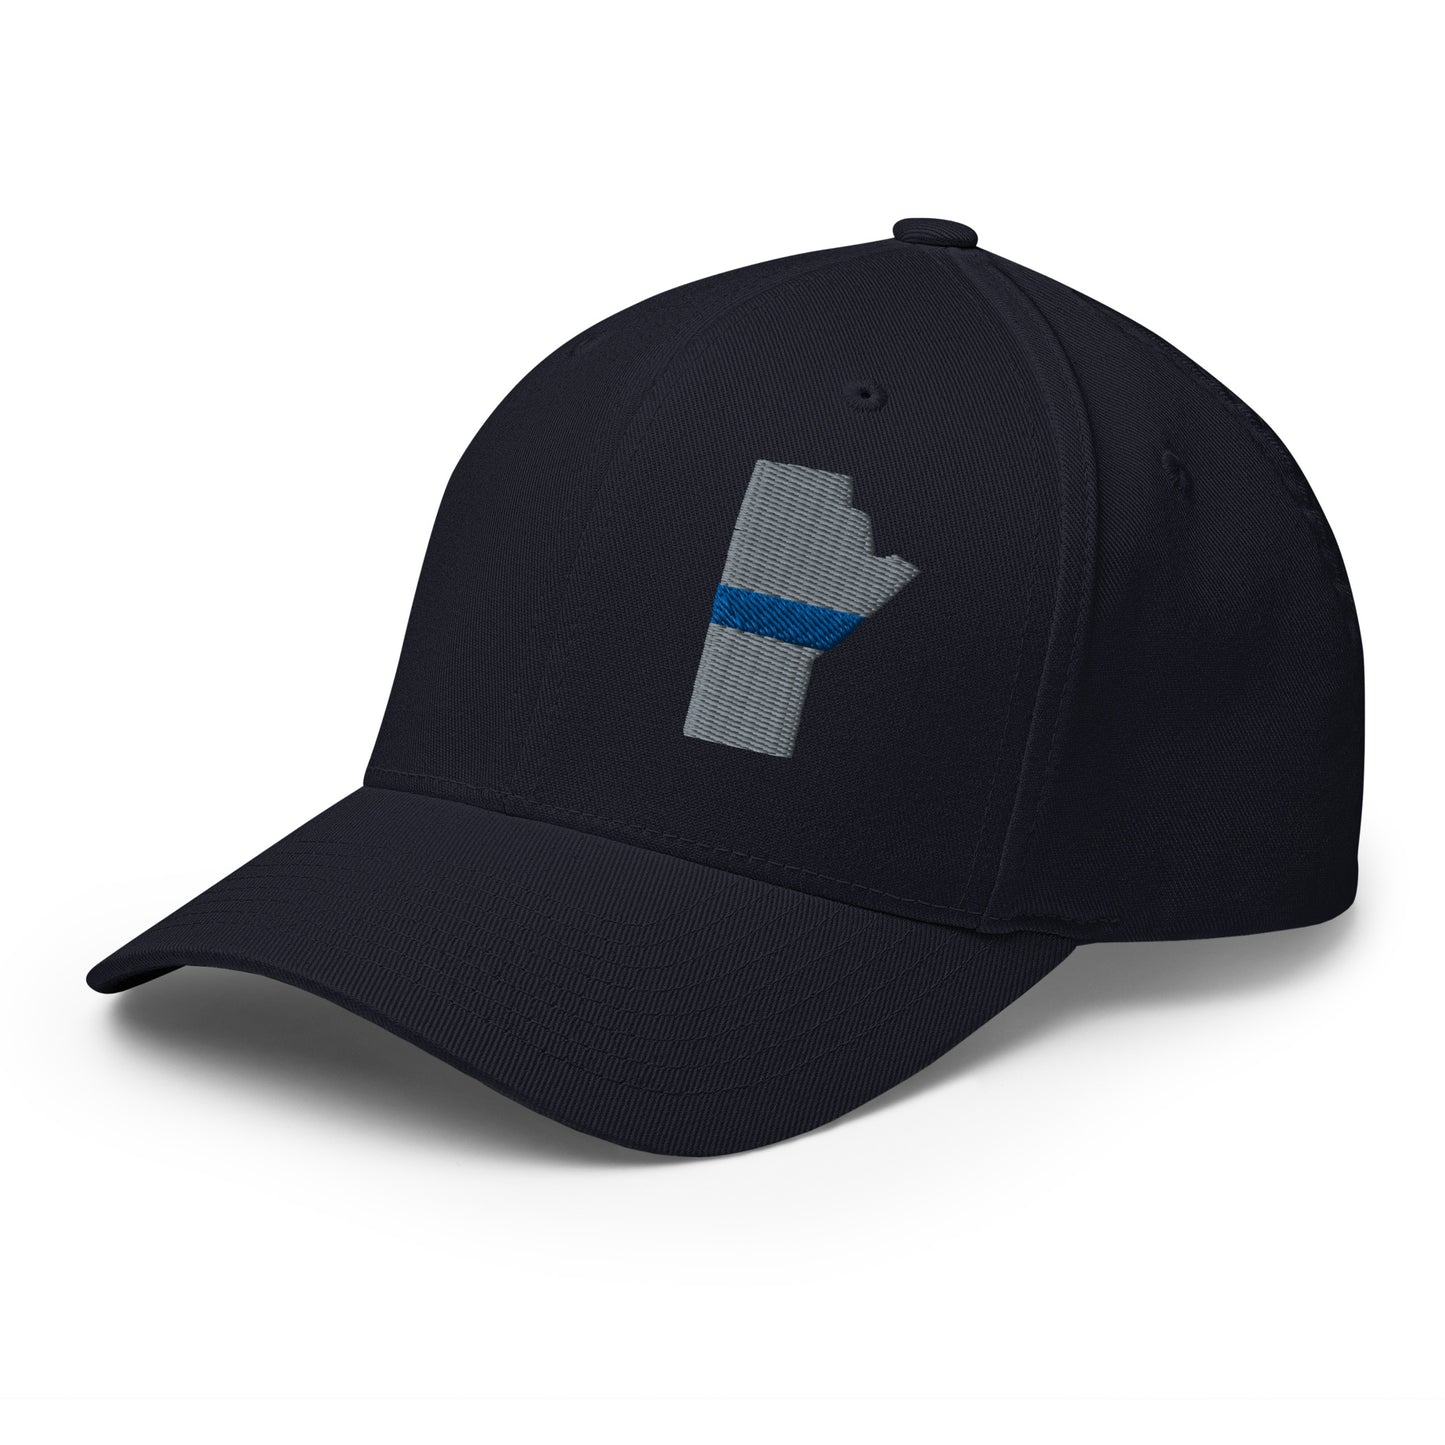 Manitoba (MB) Thin Blue Line Flexfit Ball Cap